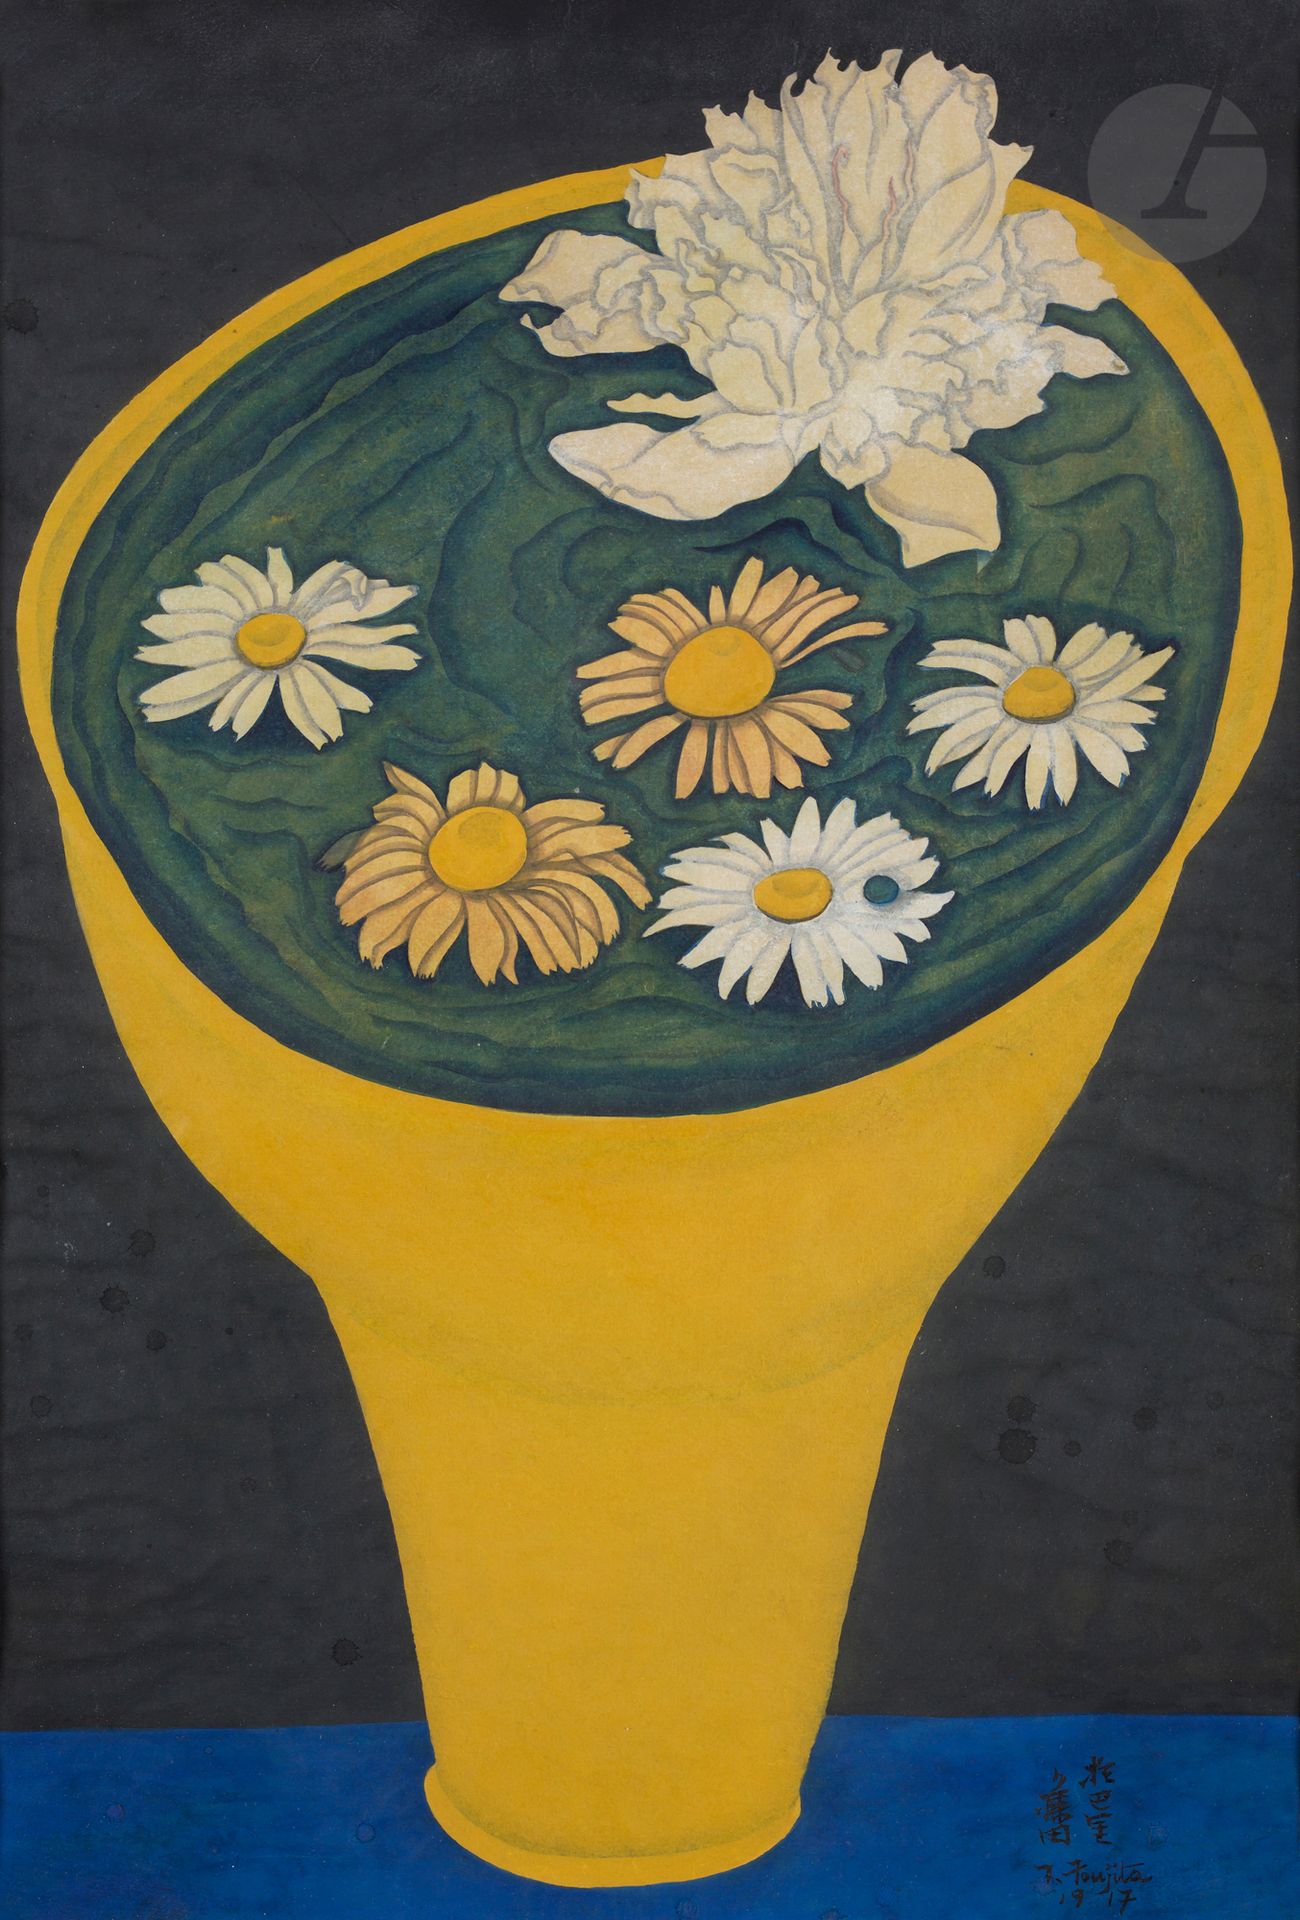 Null 伦纳德-福田赳夫(1886-1968)
花瓶，1917年
水彩、墨水和钢笔画。
右下方有签名和日期。
以日文签名并定位。
36 x 24,5 cm

&hellip;